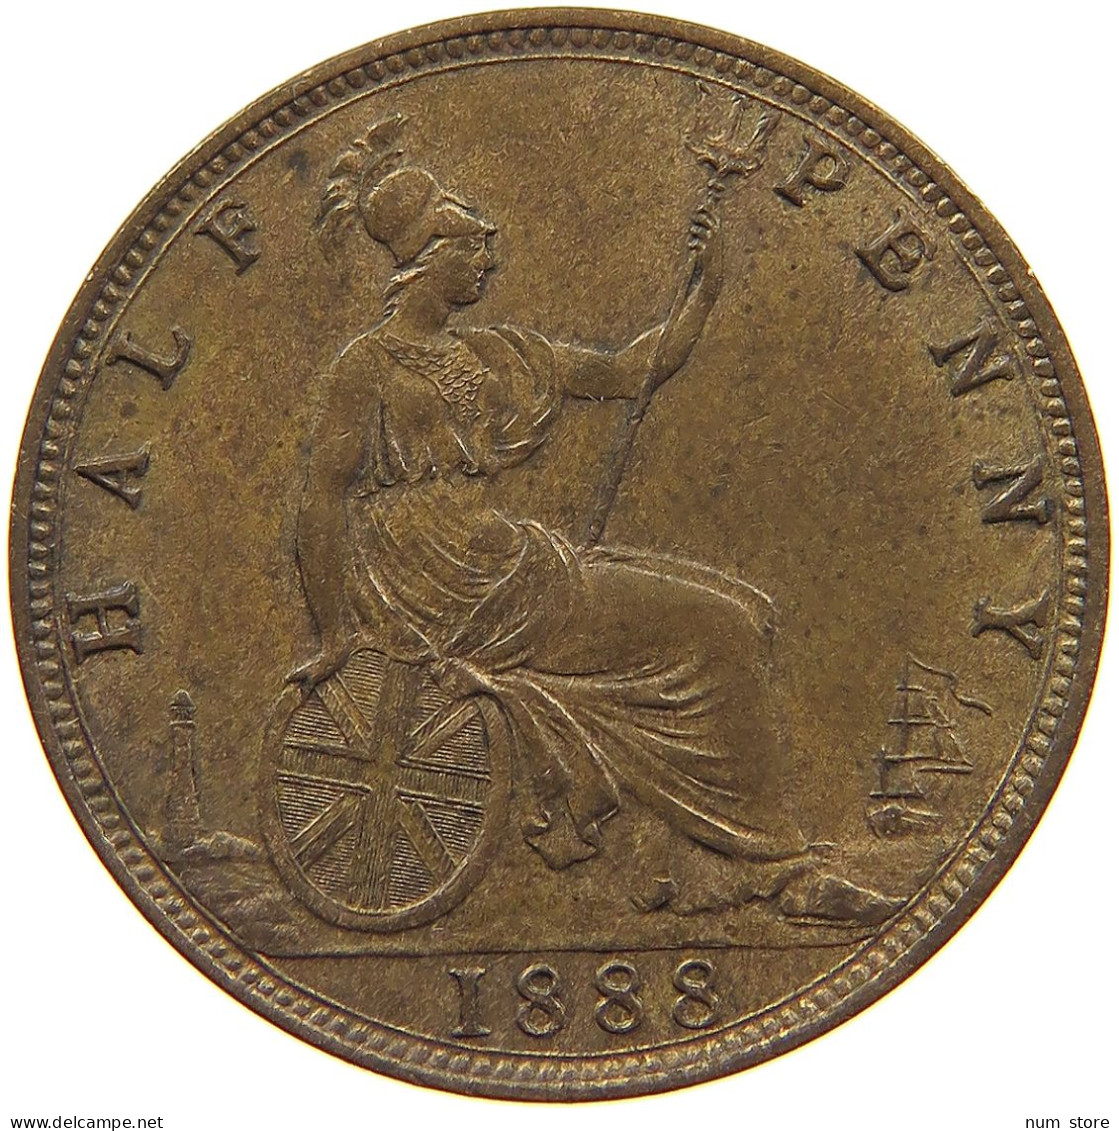 GREAT BRITAIN HALFPENNY 1888 Victoria 1837-1901 #t138 0117 - C. 1/2 Penny